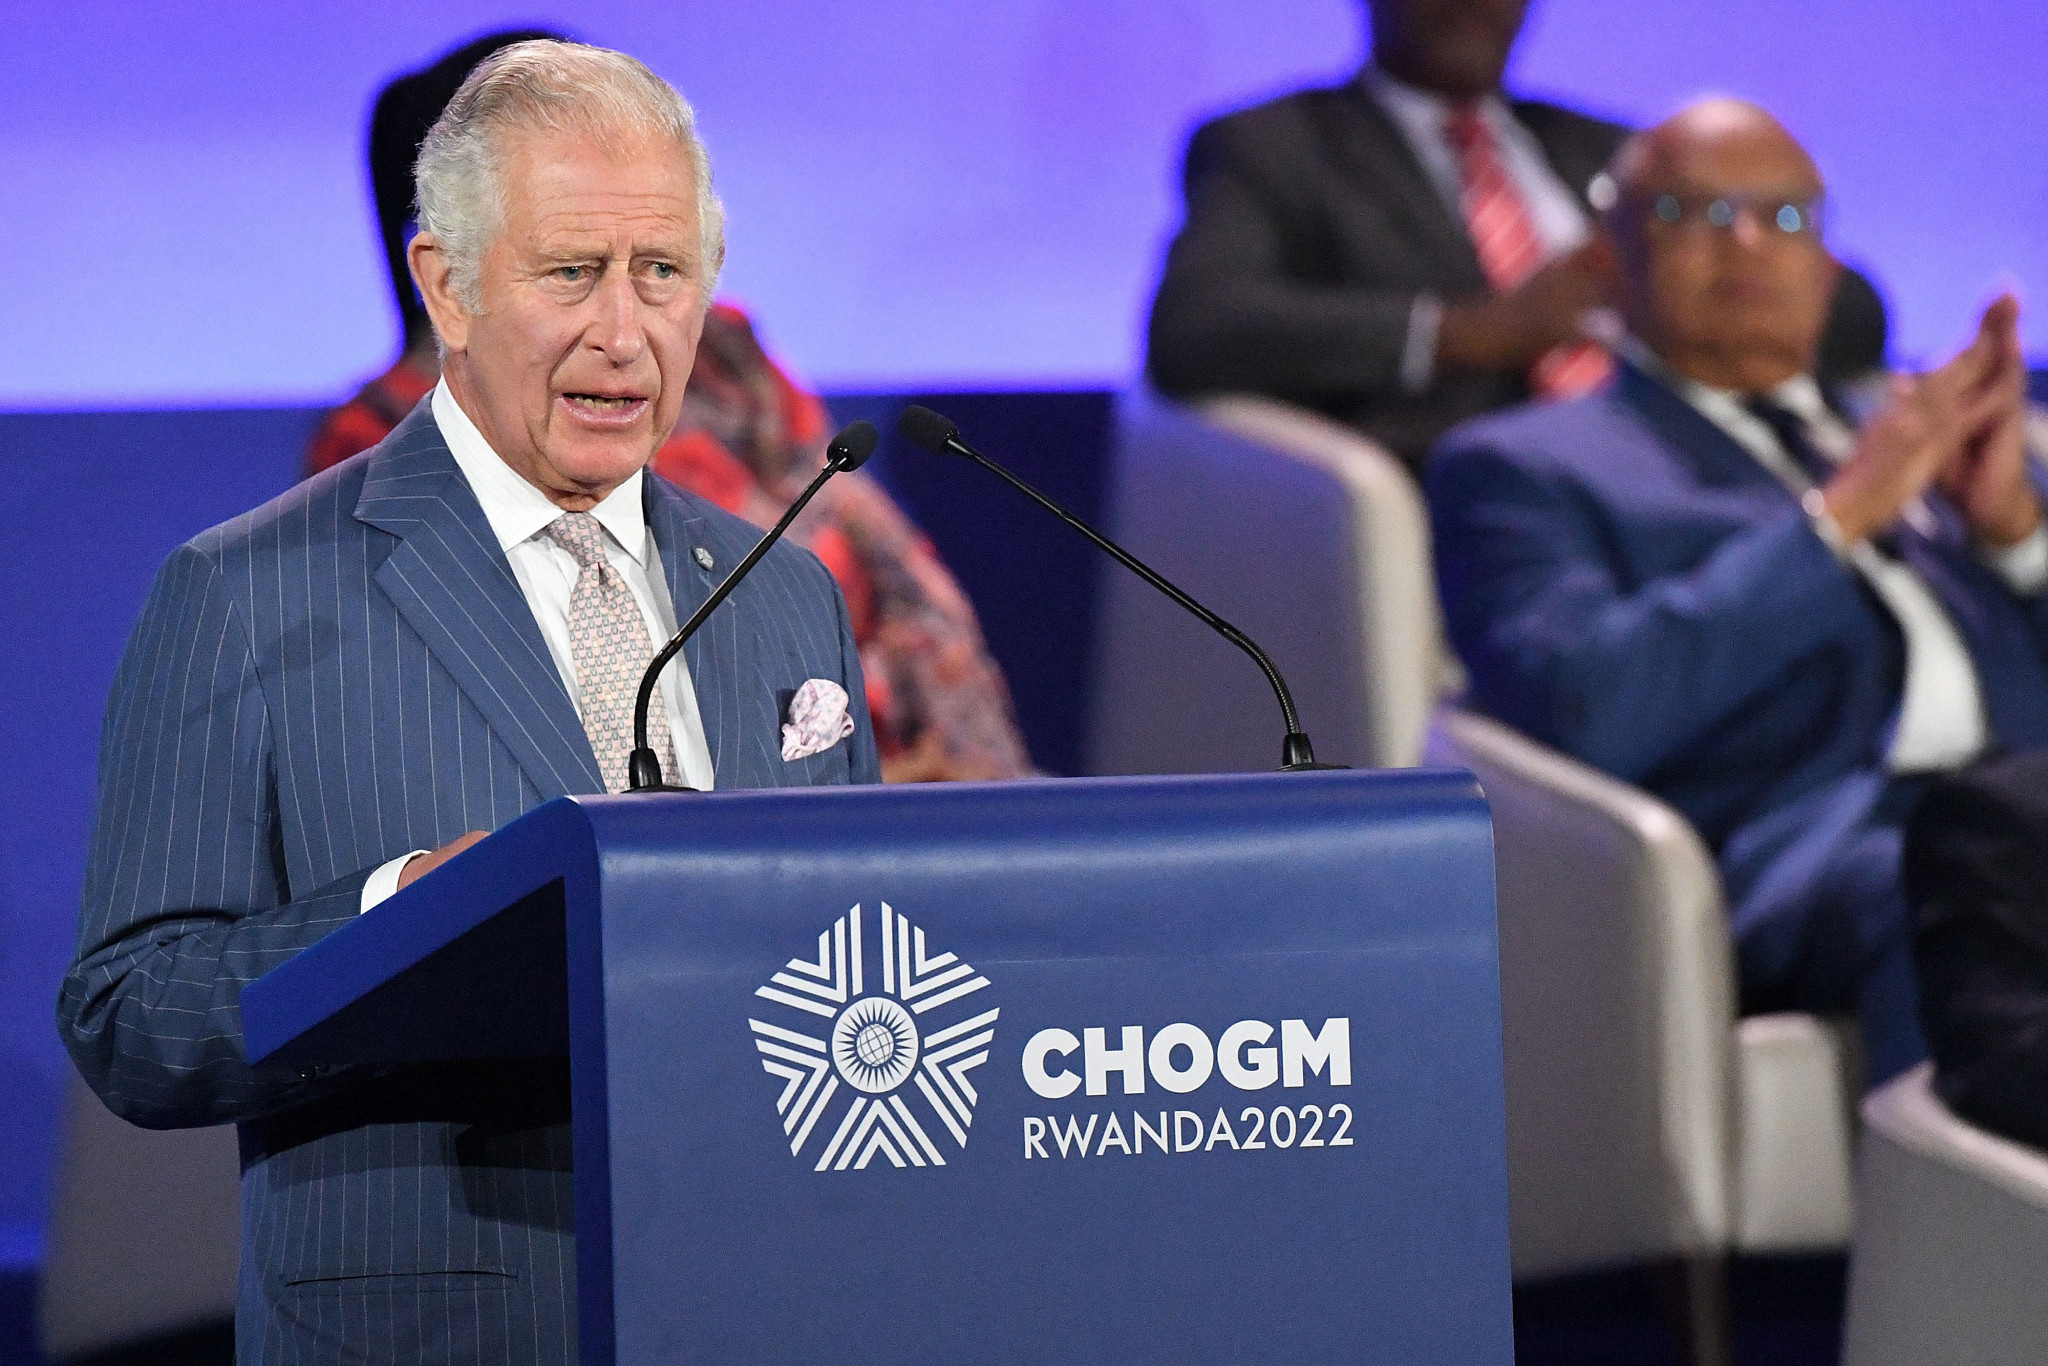 Prince Charles "looking forward" to Birmingham 2022 Commonwealth Games